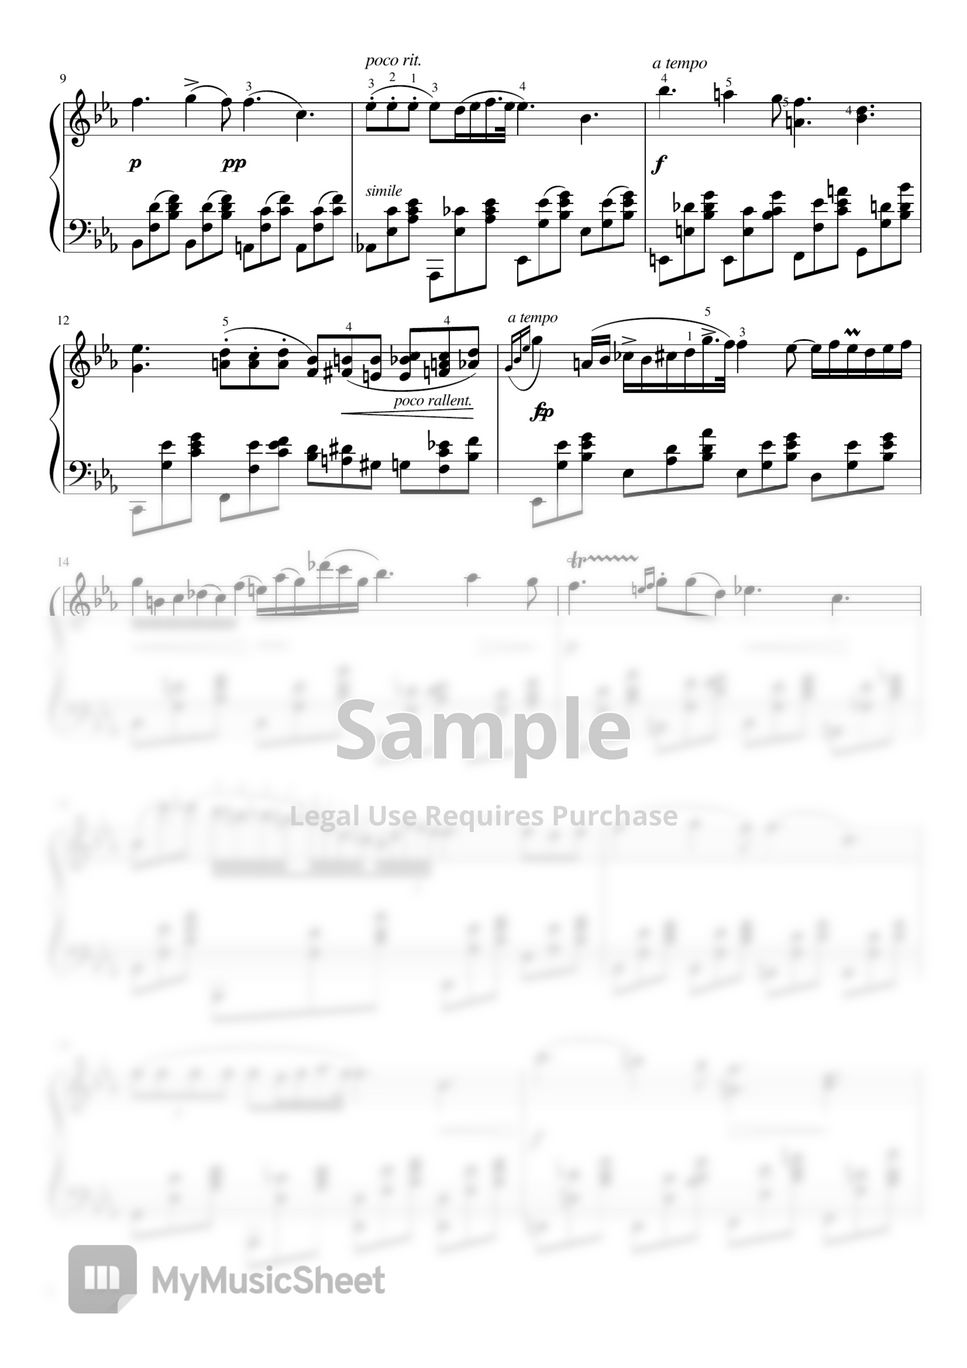 F. Chopin - Nocturne Op 9 No 2 E Flat Major by F. Chopin